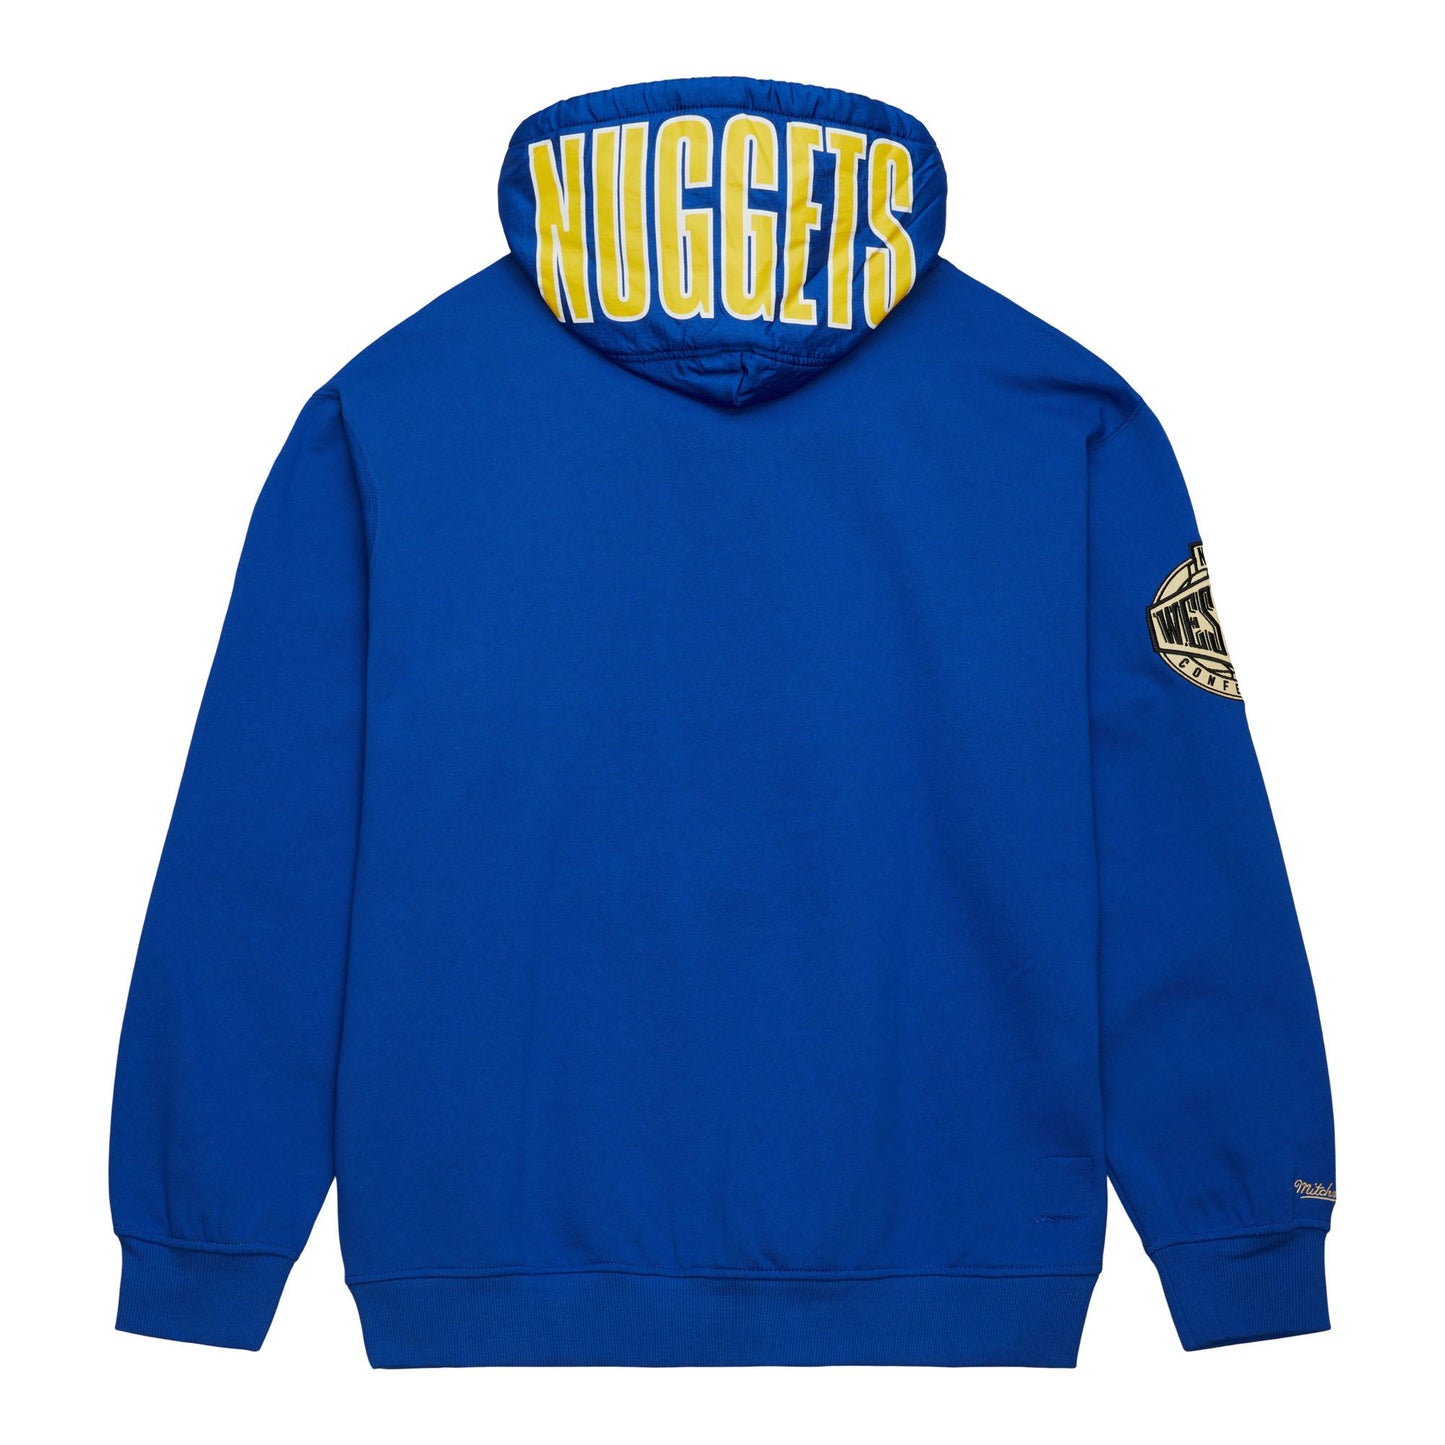 Nuggets Team OG 2.0 Vintage Hoody